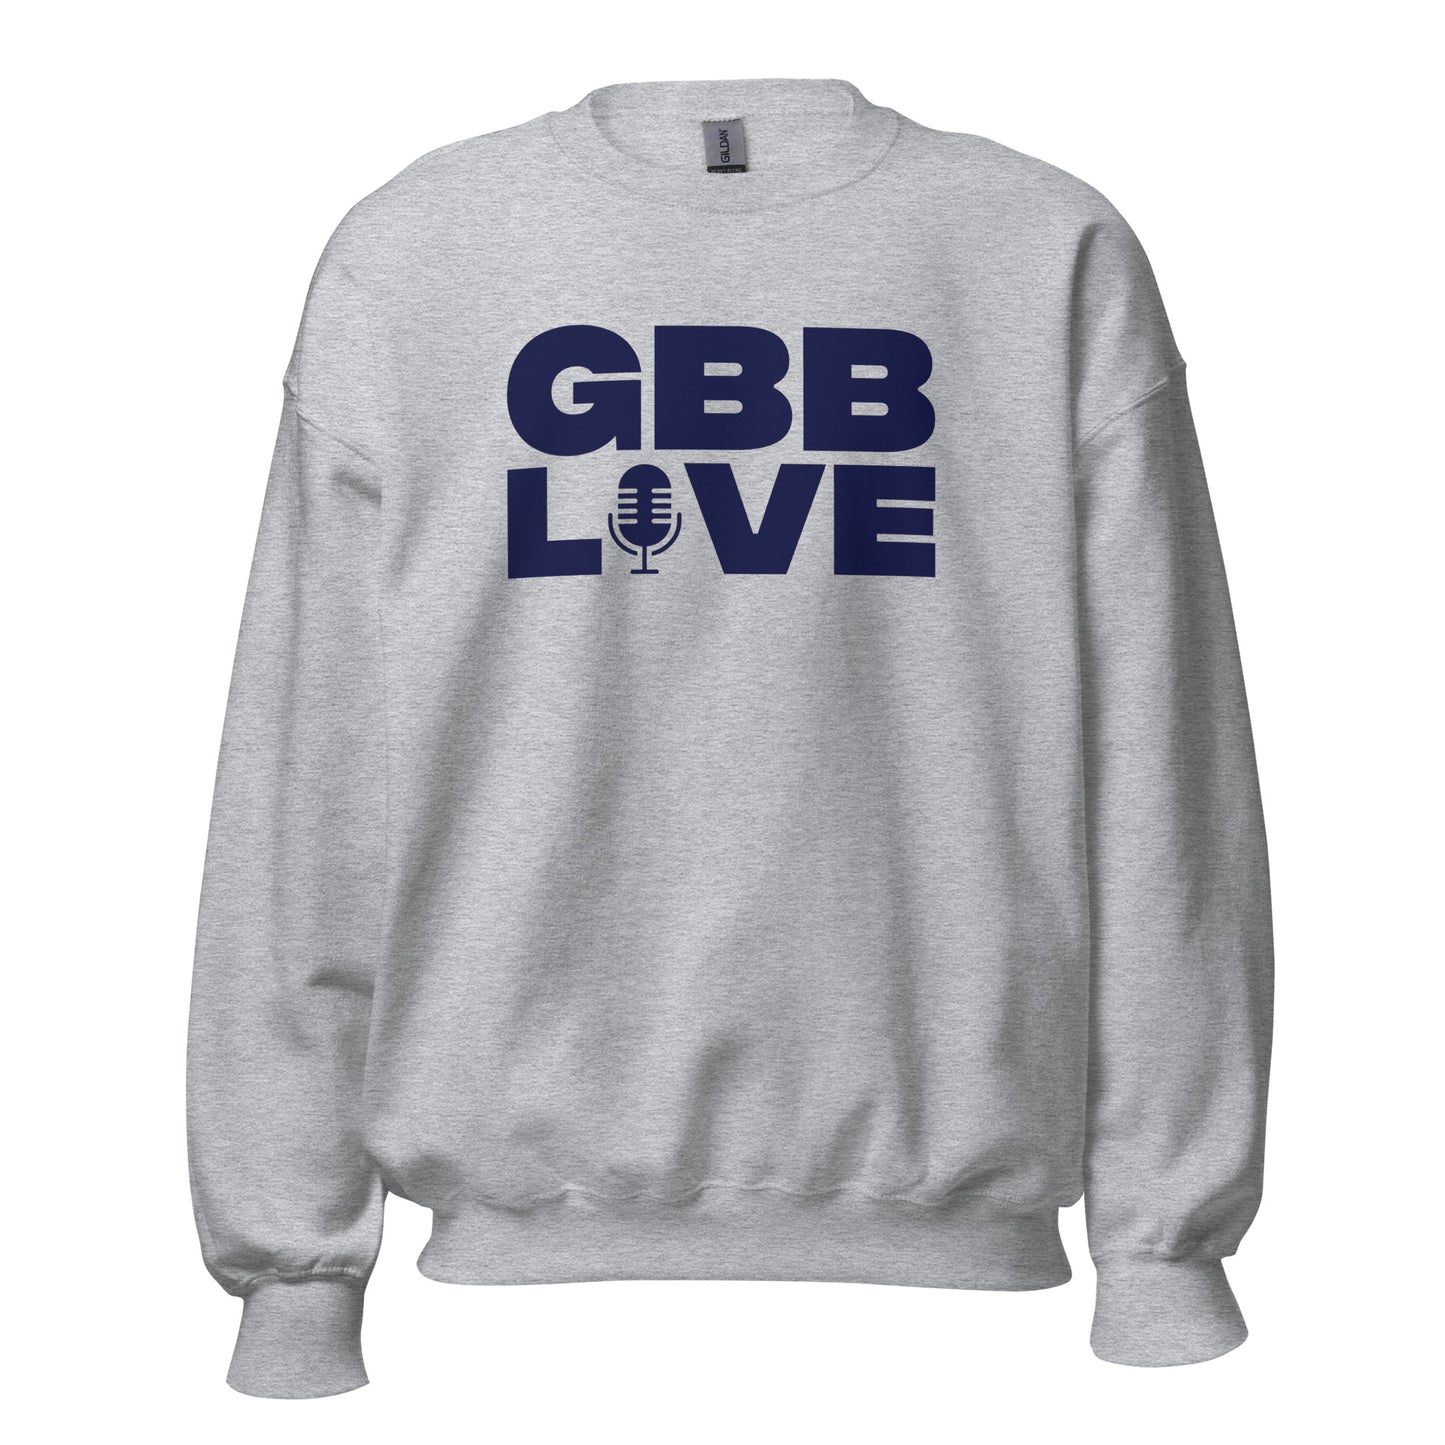 GBB Live Sweatshirt